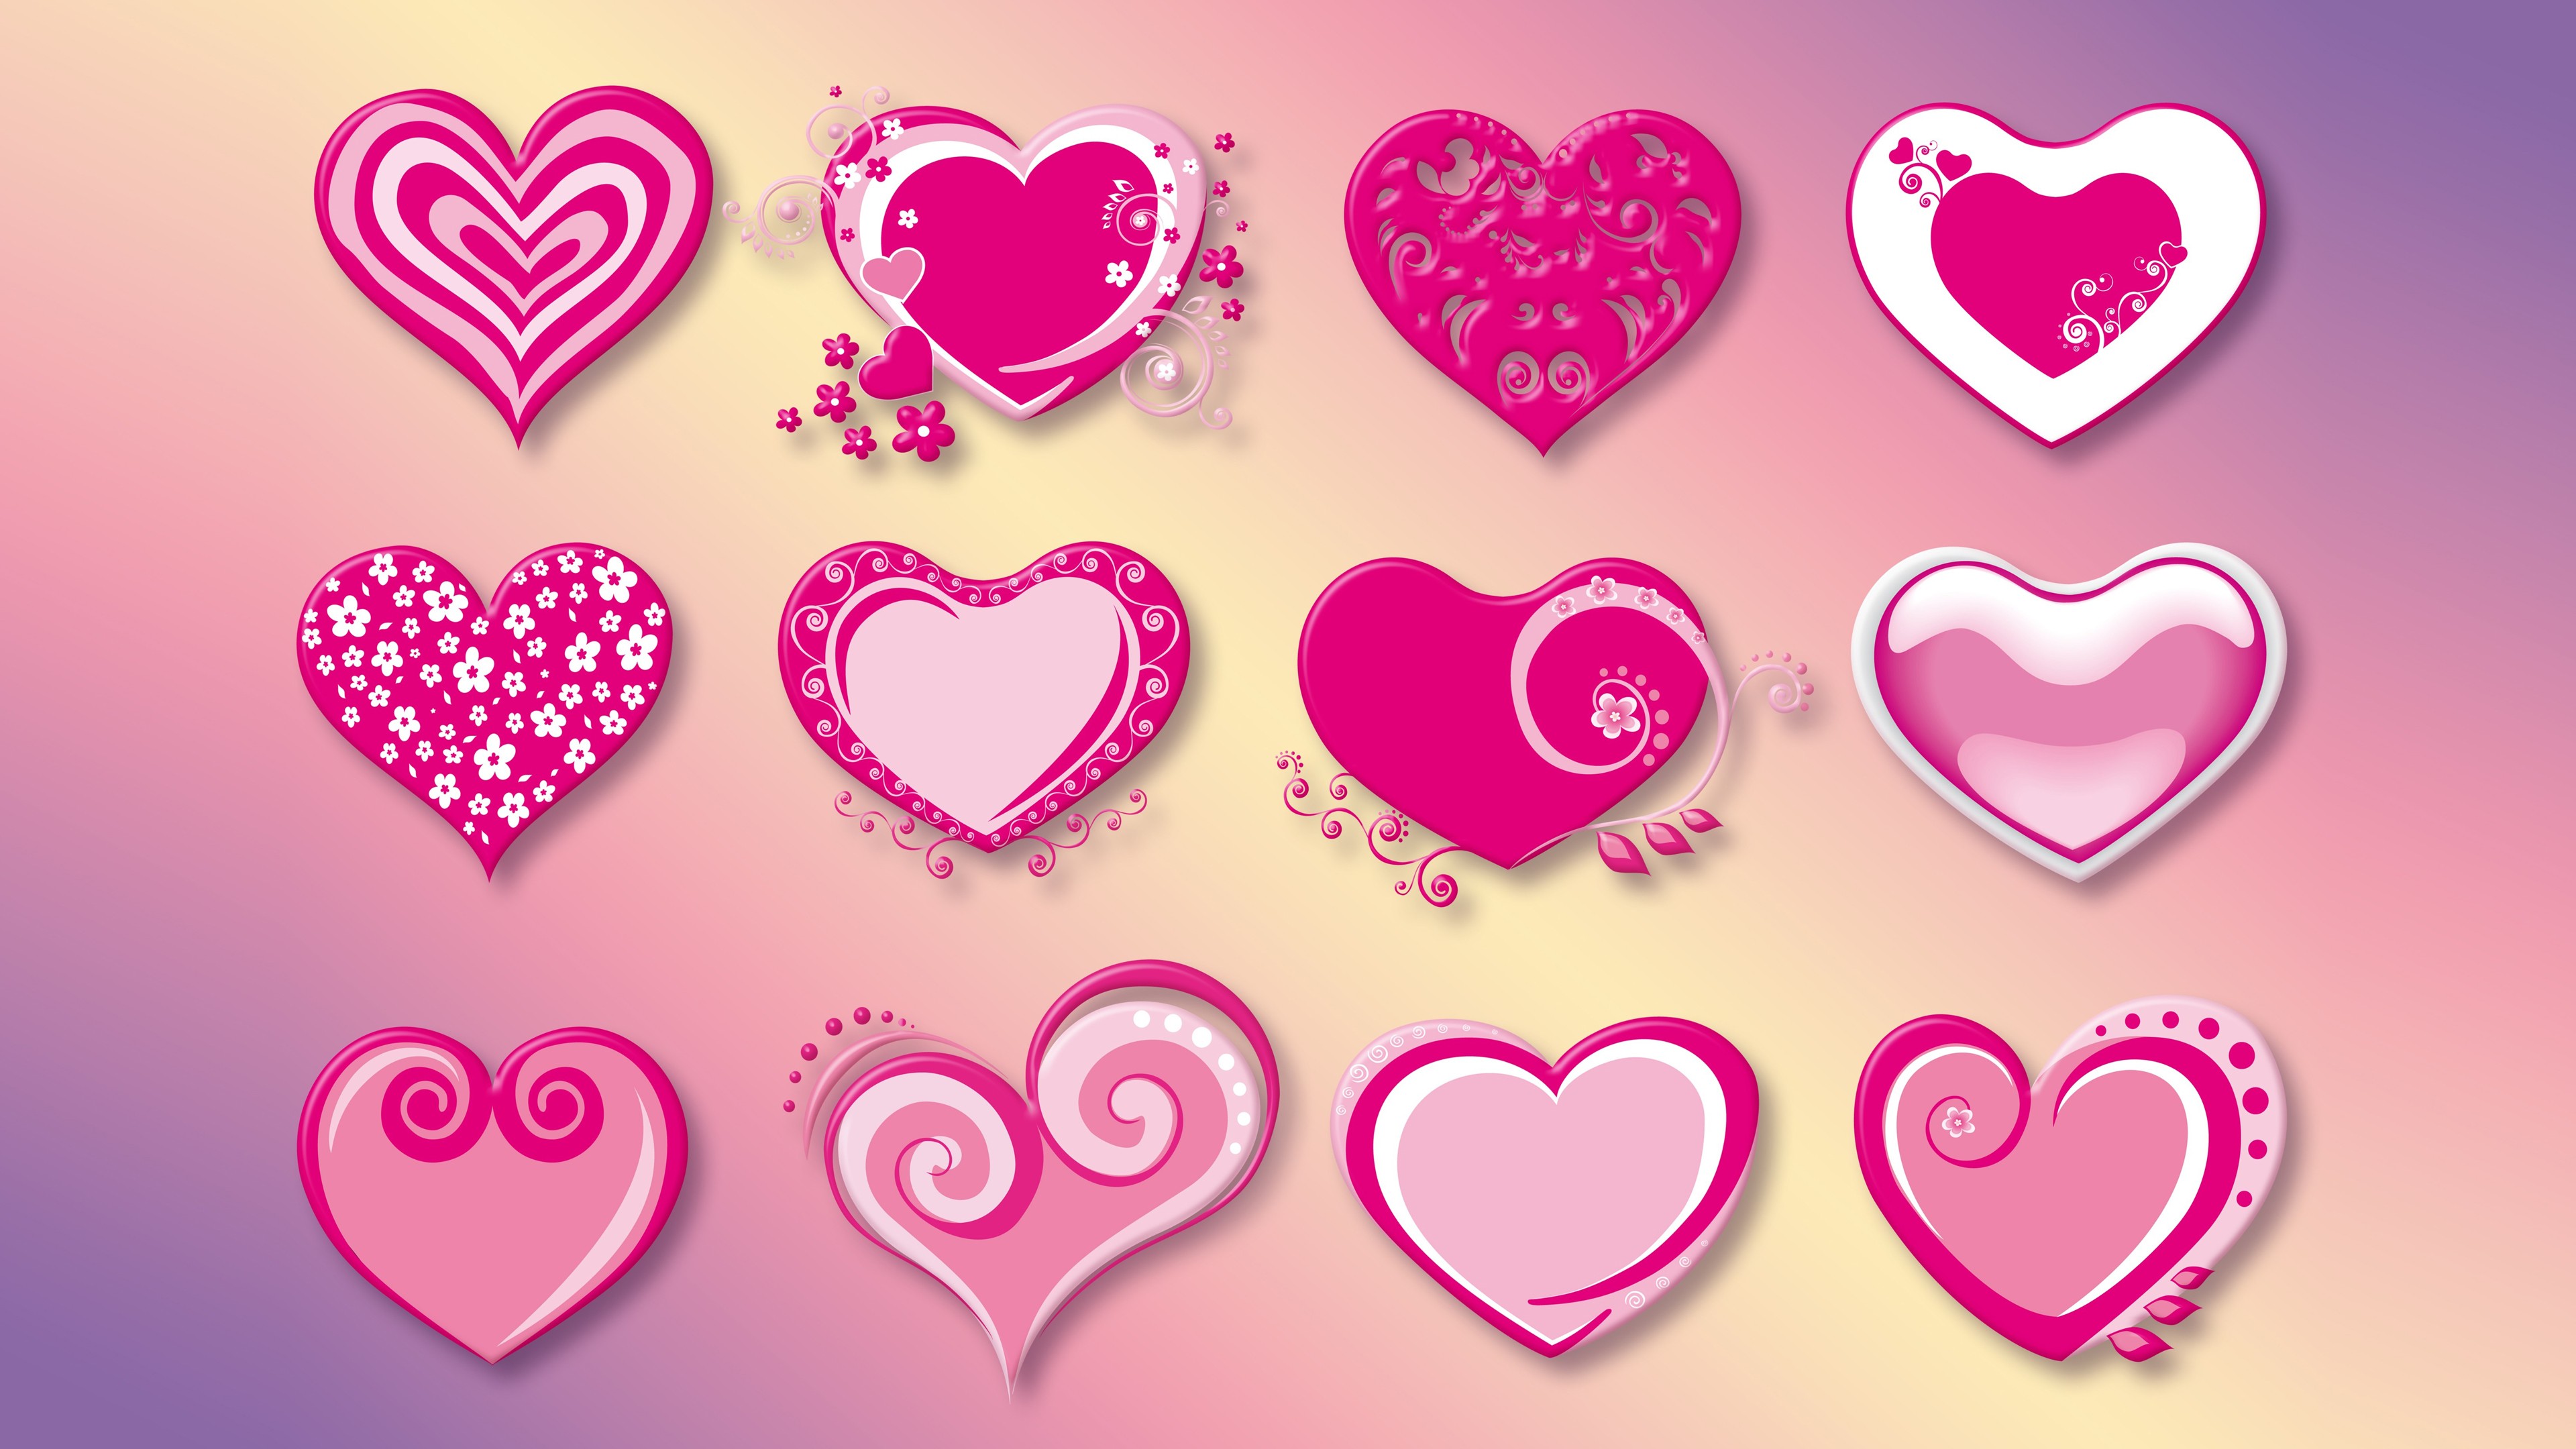 General 3840x2160 love Valentine's Day pink vector heart (design) digital art simple background